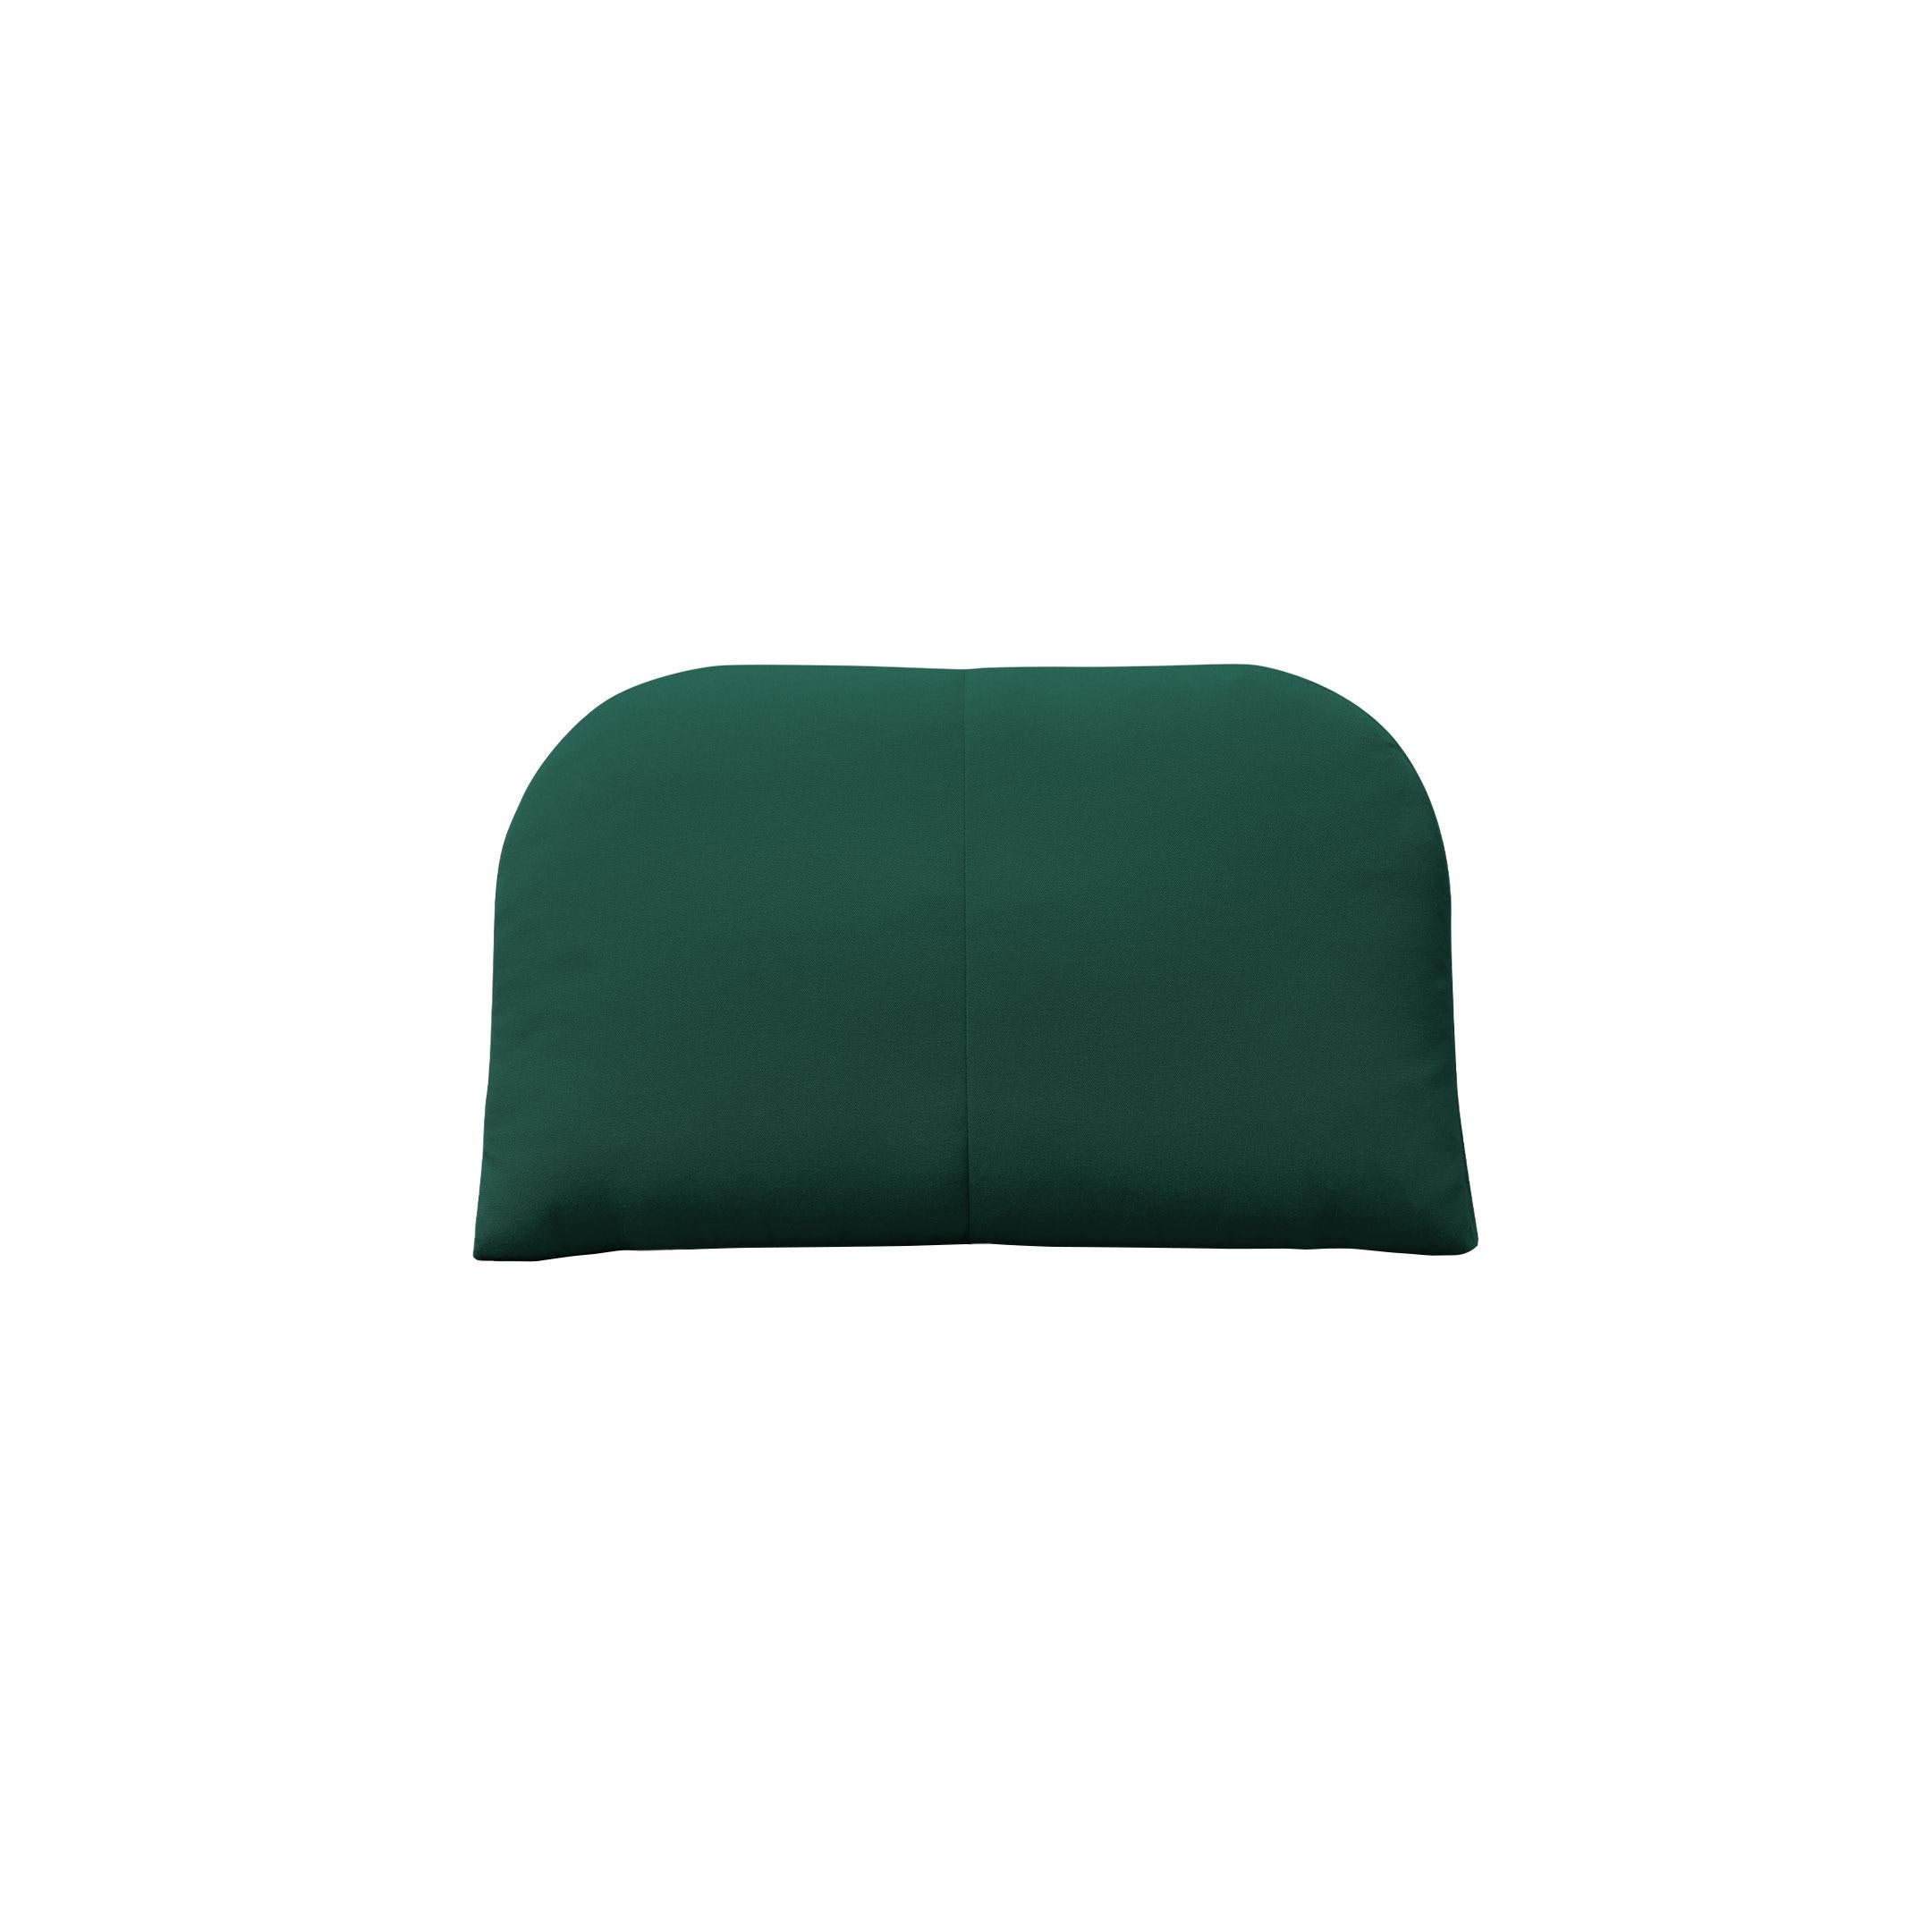 Woven Bend Goods - Arc Throw Pillow in Navy Blue Sunbrella For Sale